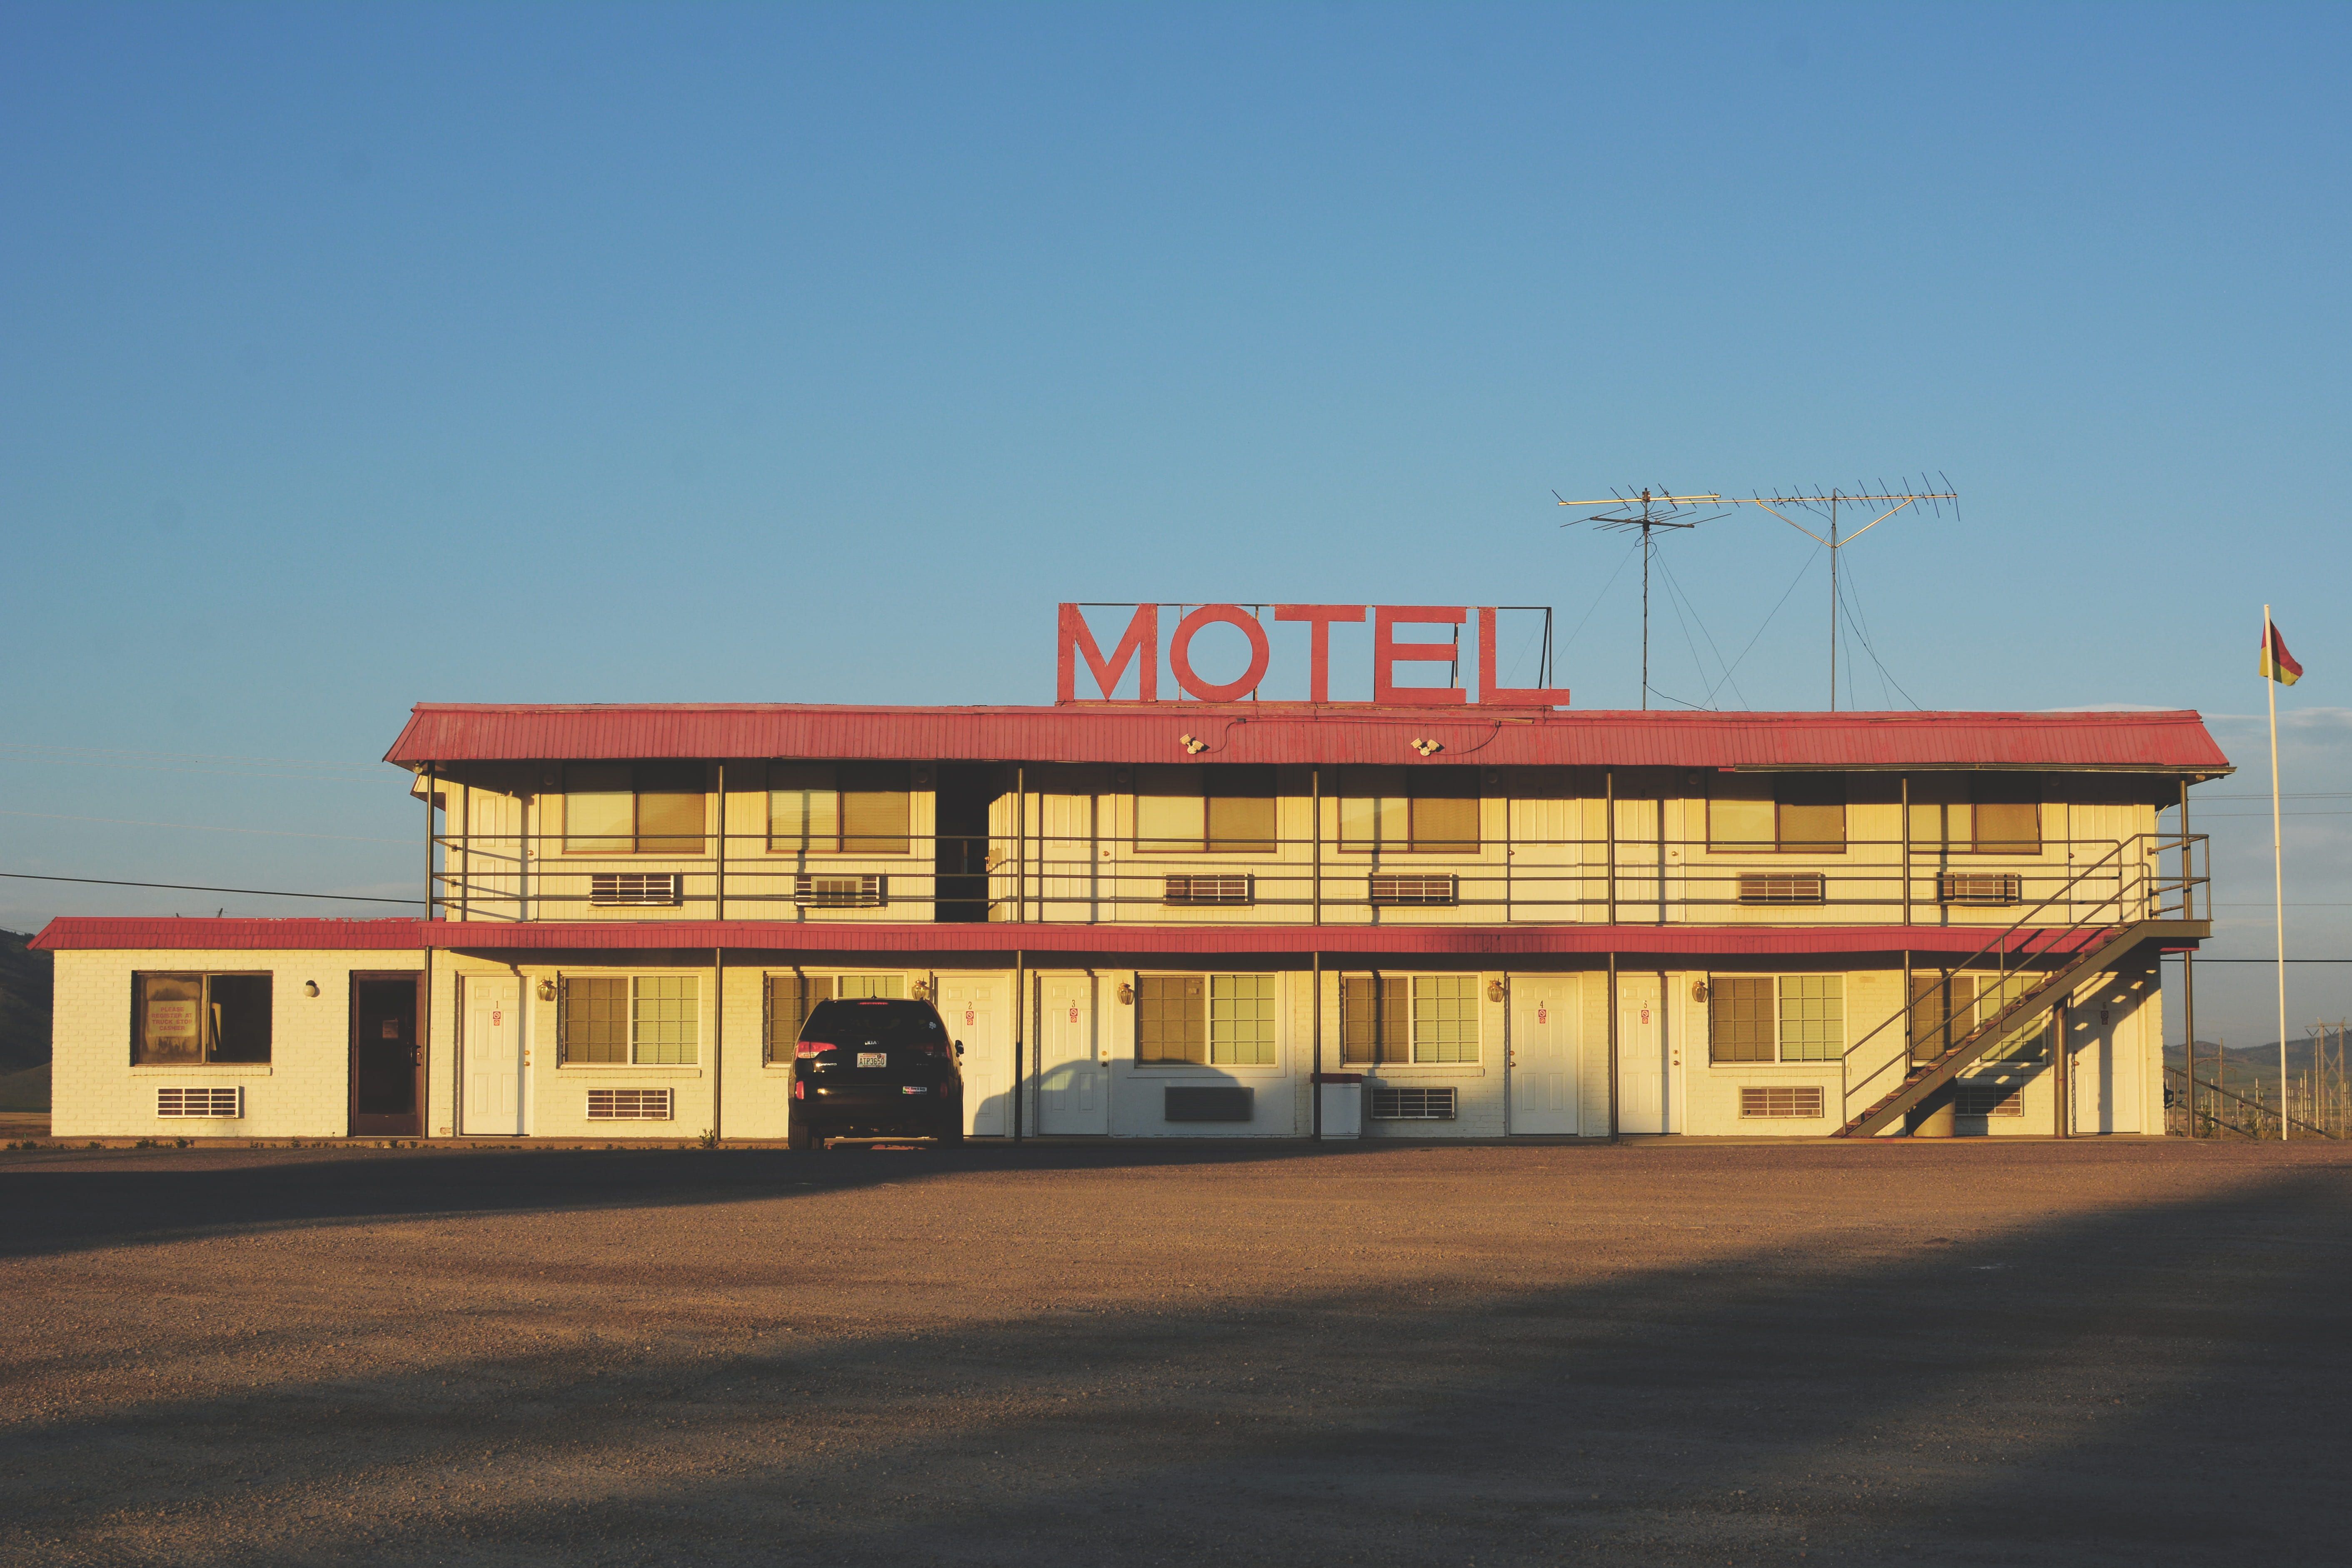 Motel / Piqsels